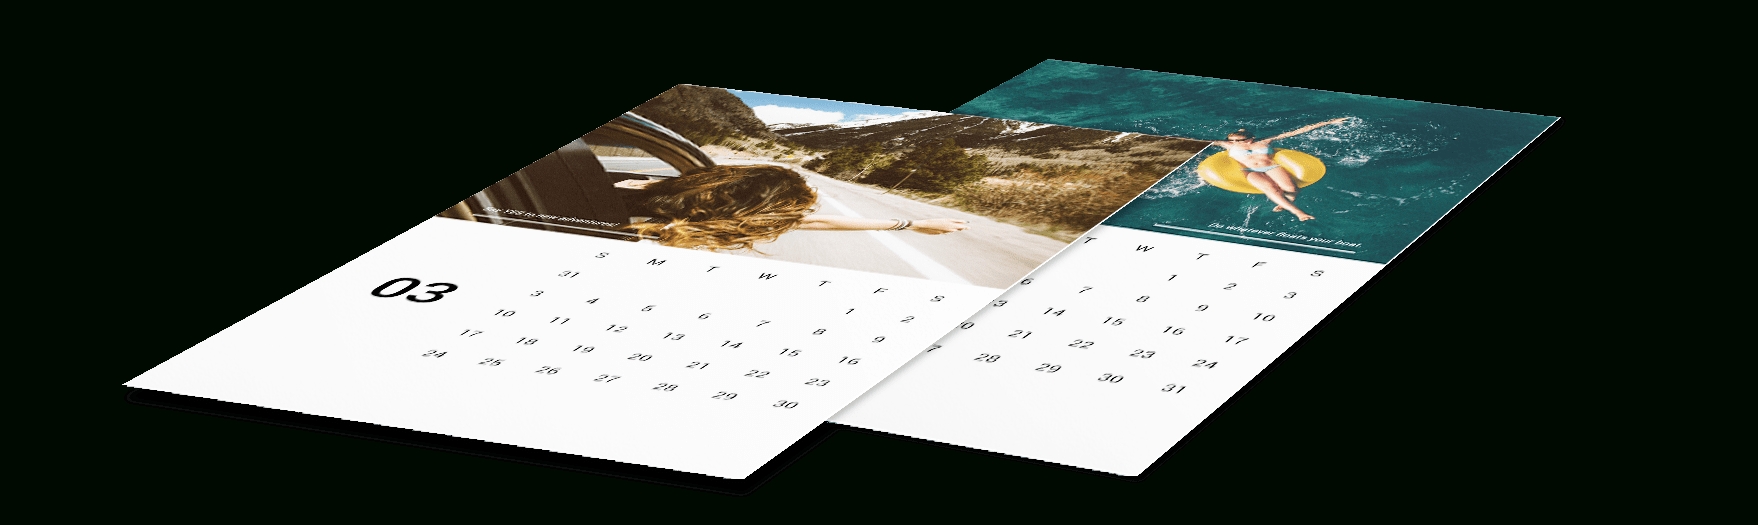 Personalised Photo Calendar | Online Calendars Printing Worldwide Custom Calendar Printing Hong Kong